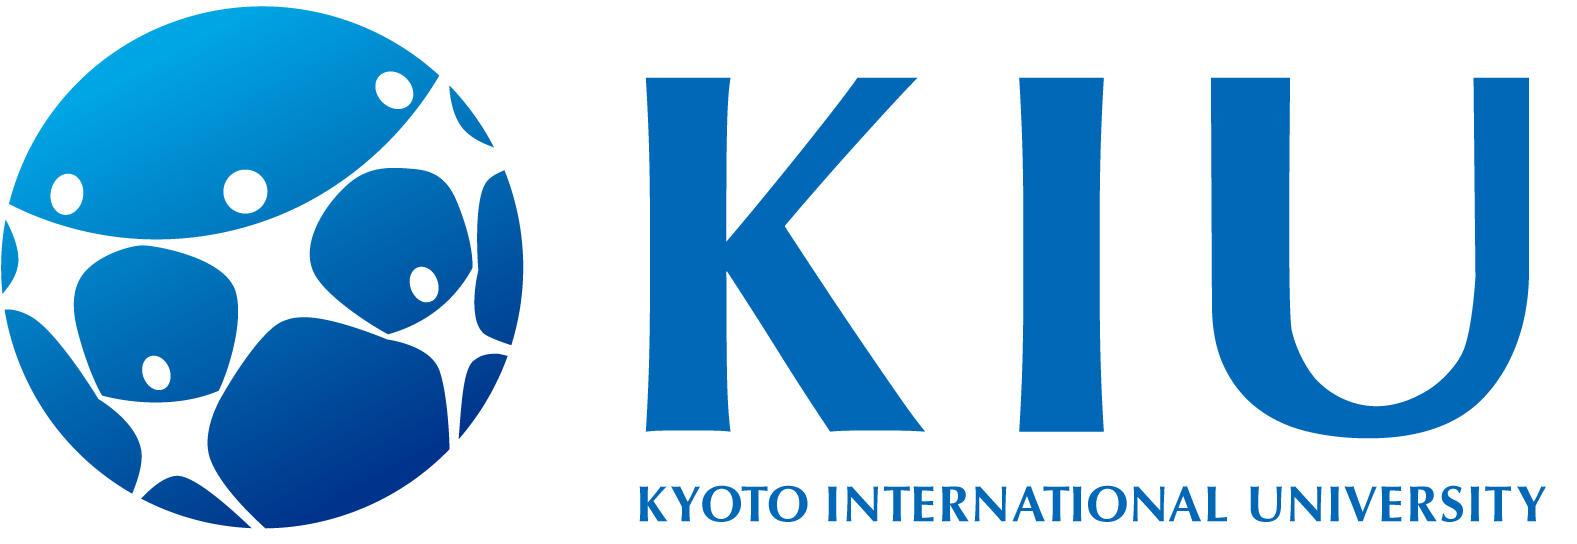 Kyoto International University Japan